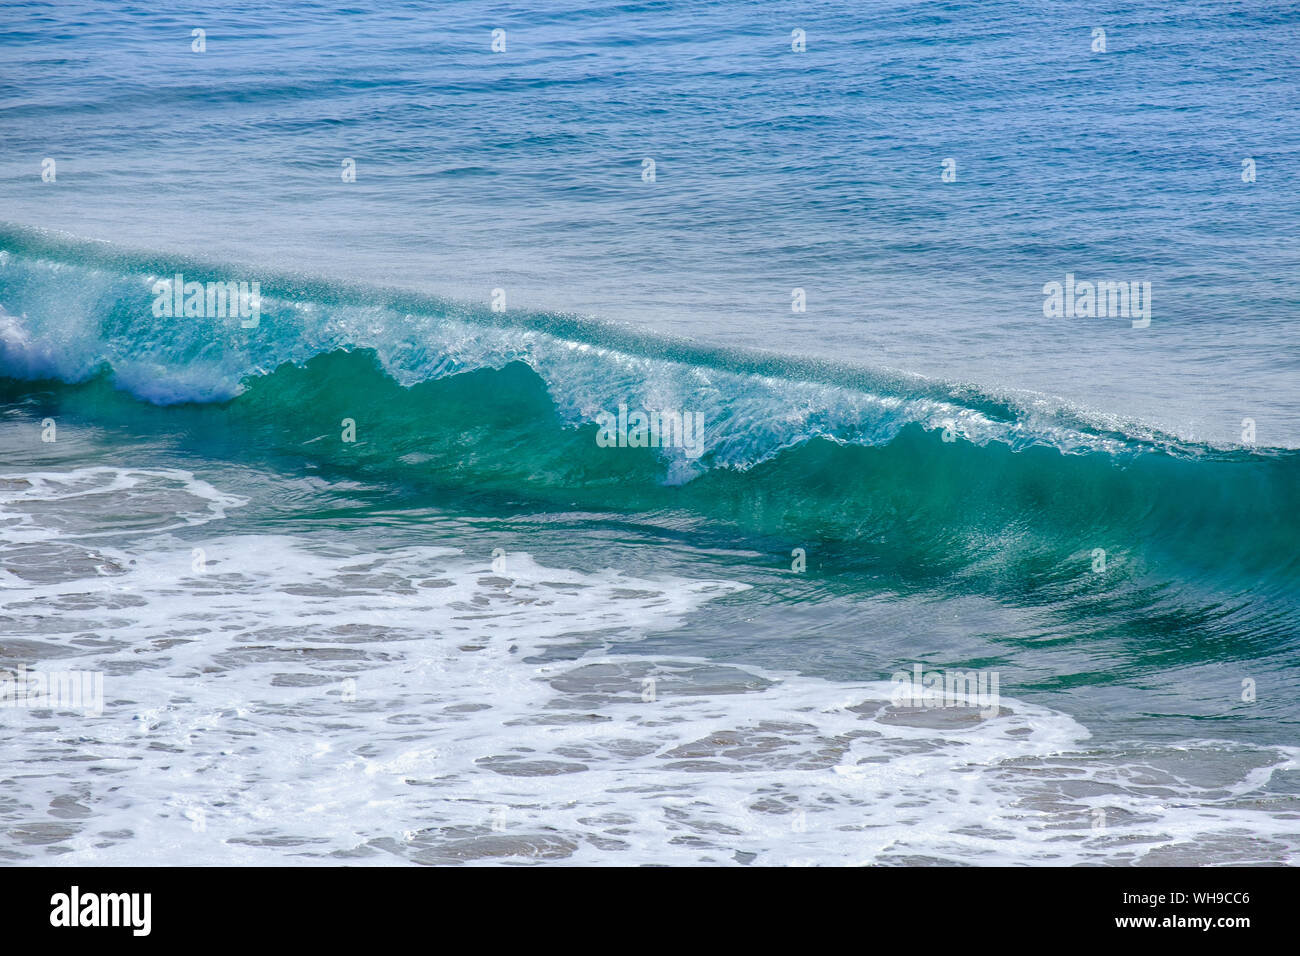 Breaking wave, Lanzarote, Spain Stock Photo